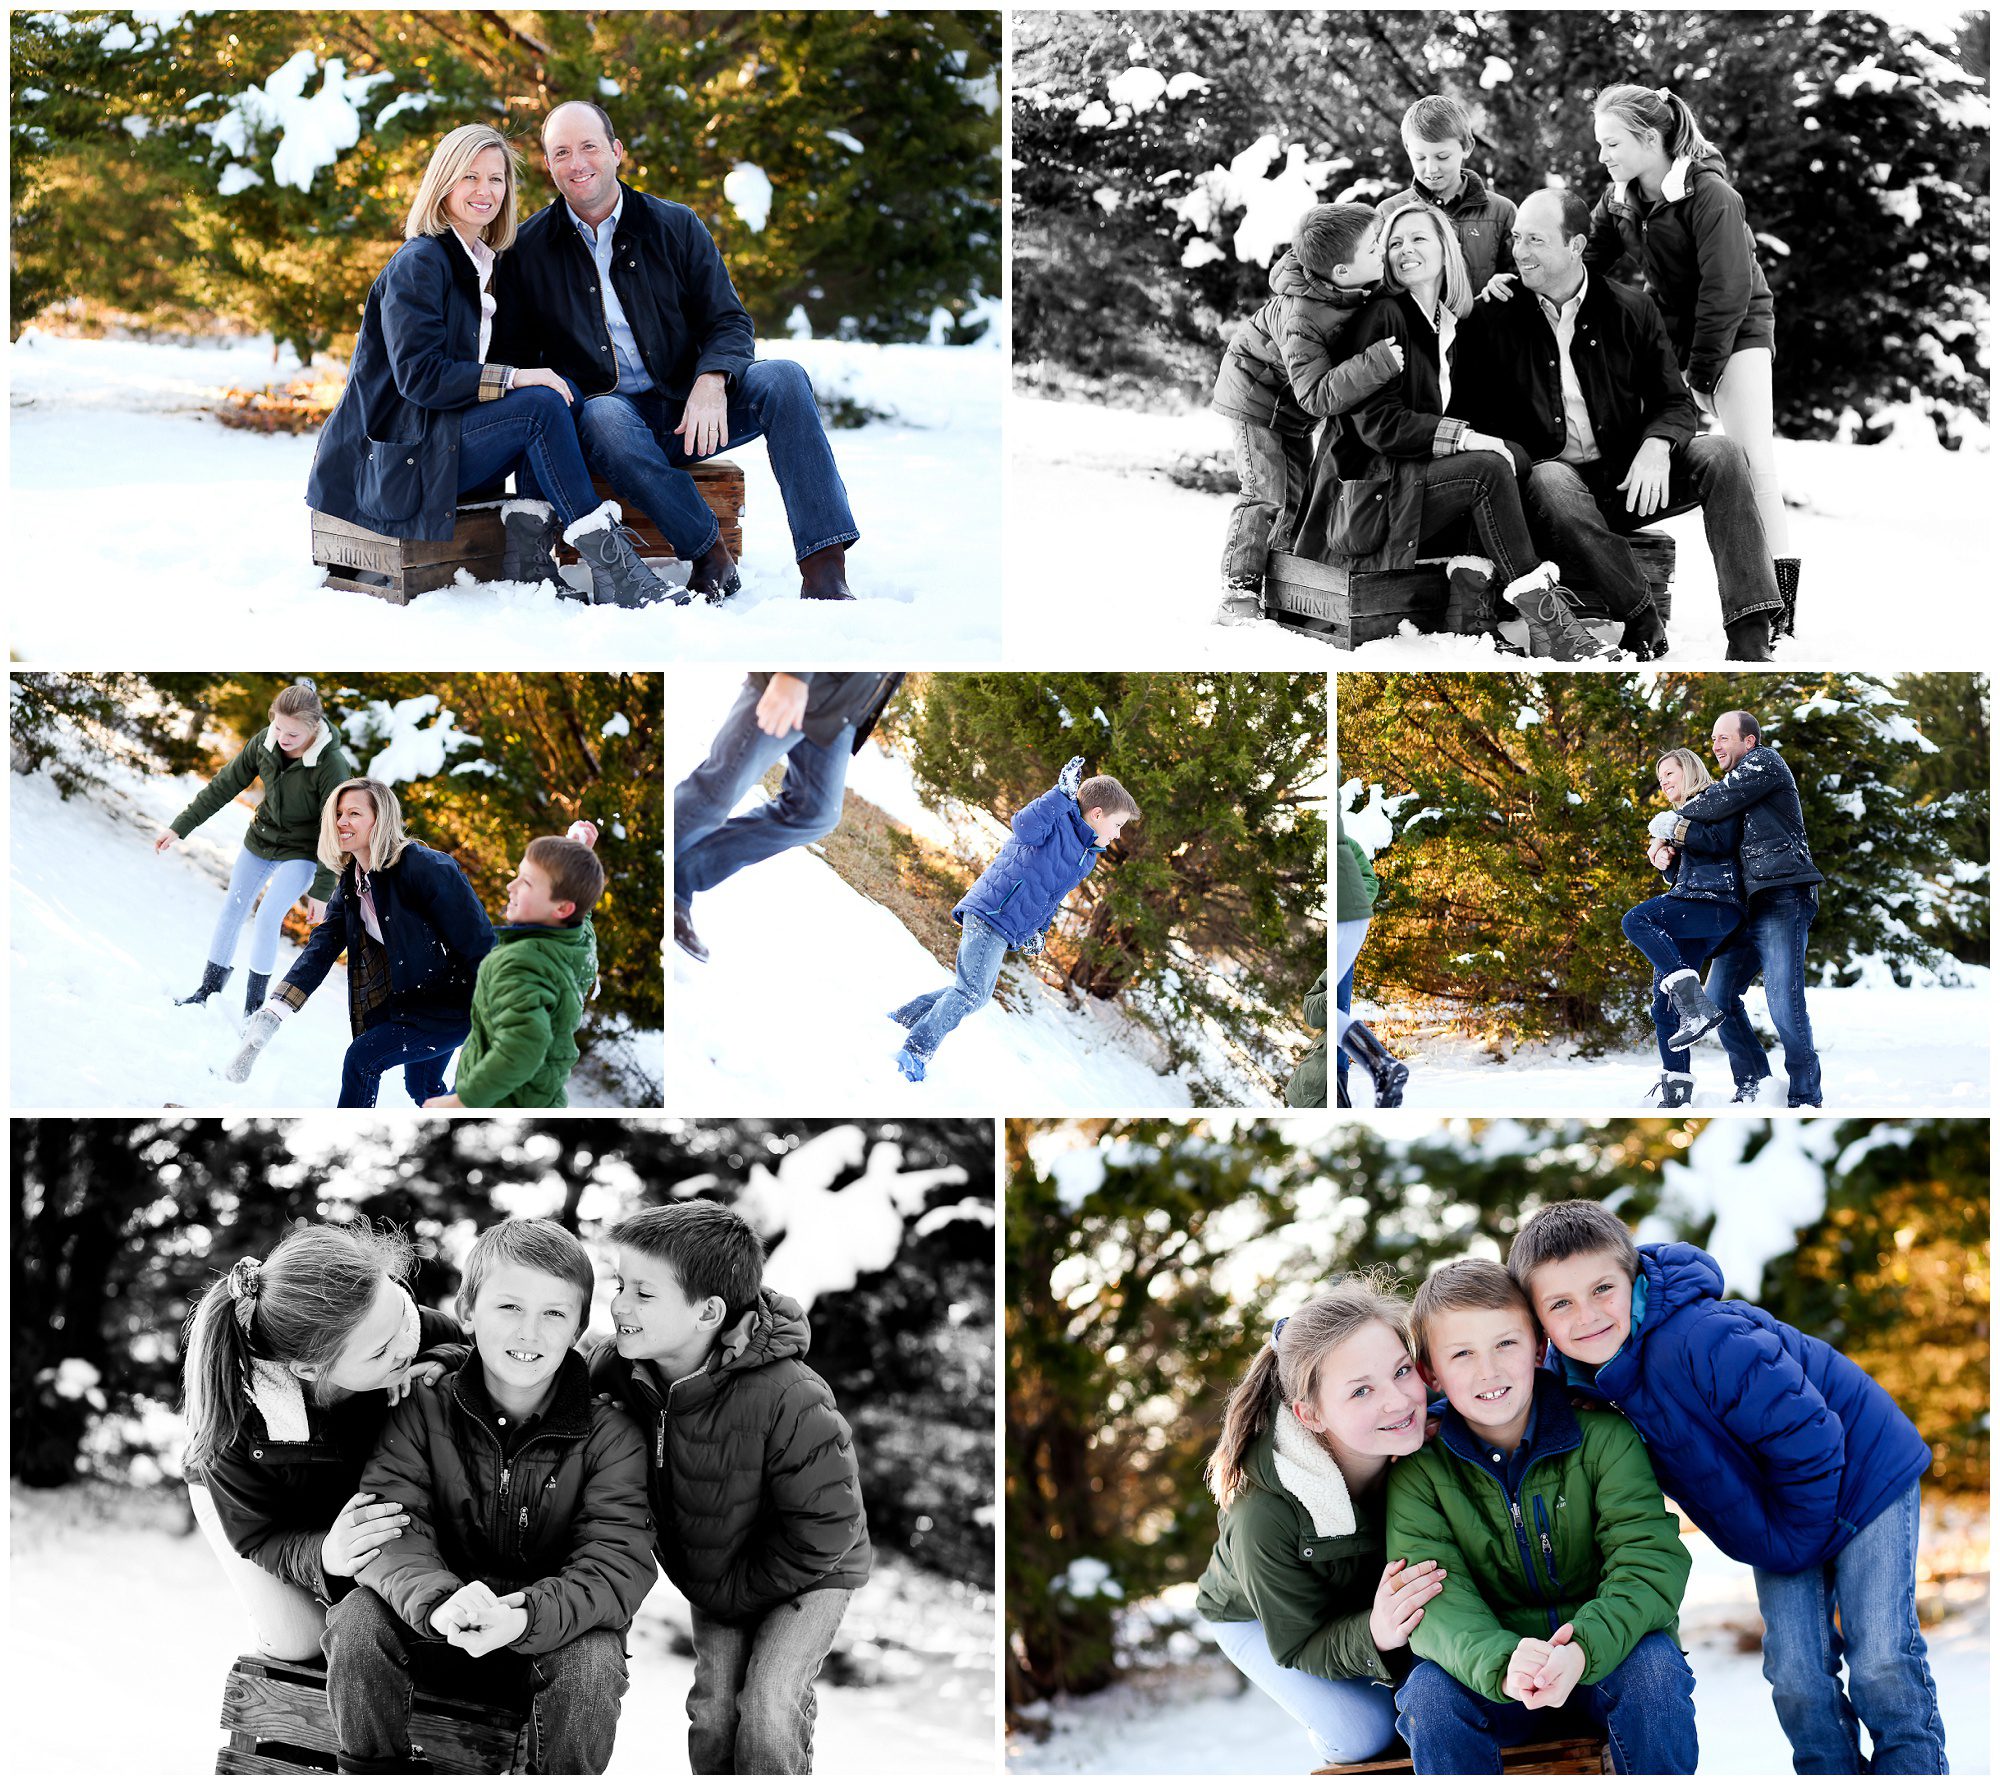 Winter Portraits with Lynchburg Family Fluvanna Snow photographer photoshoot cville charlottesville pictures virginia snowfall 